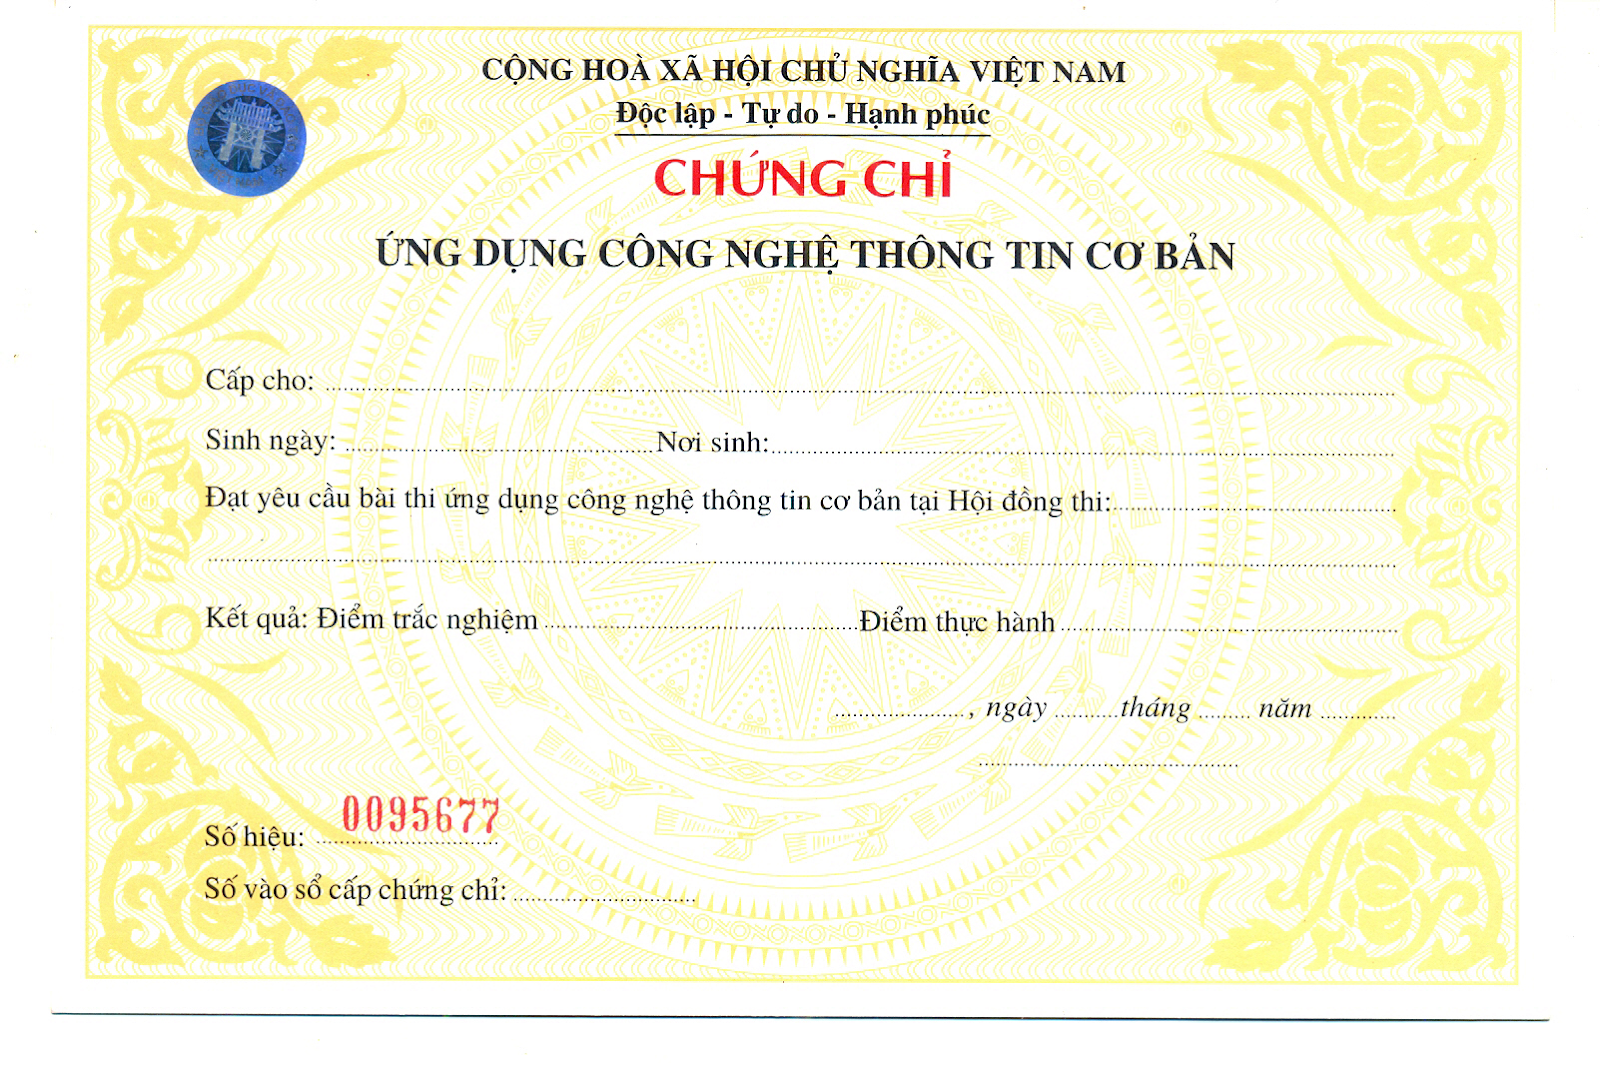 Chung chi ung dung CNTT co ban